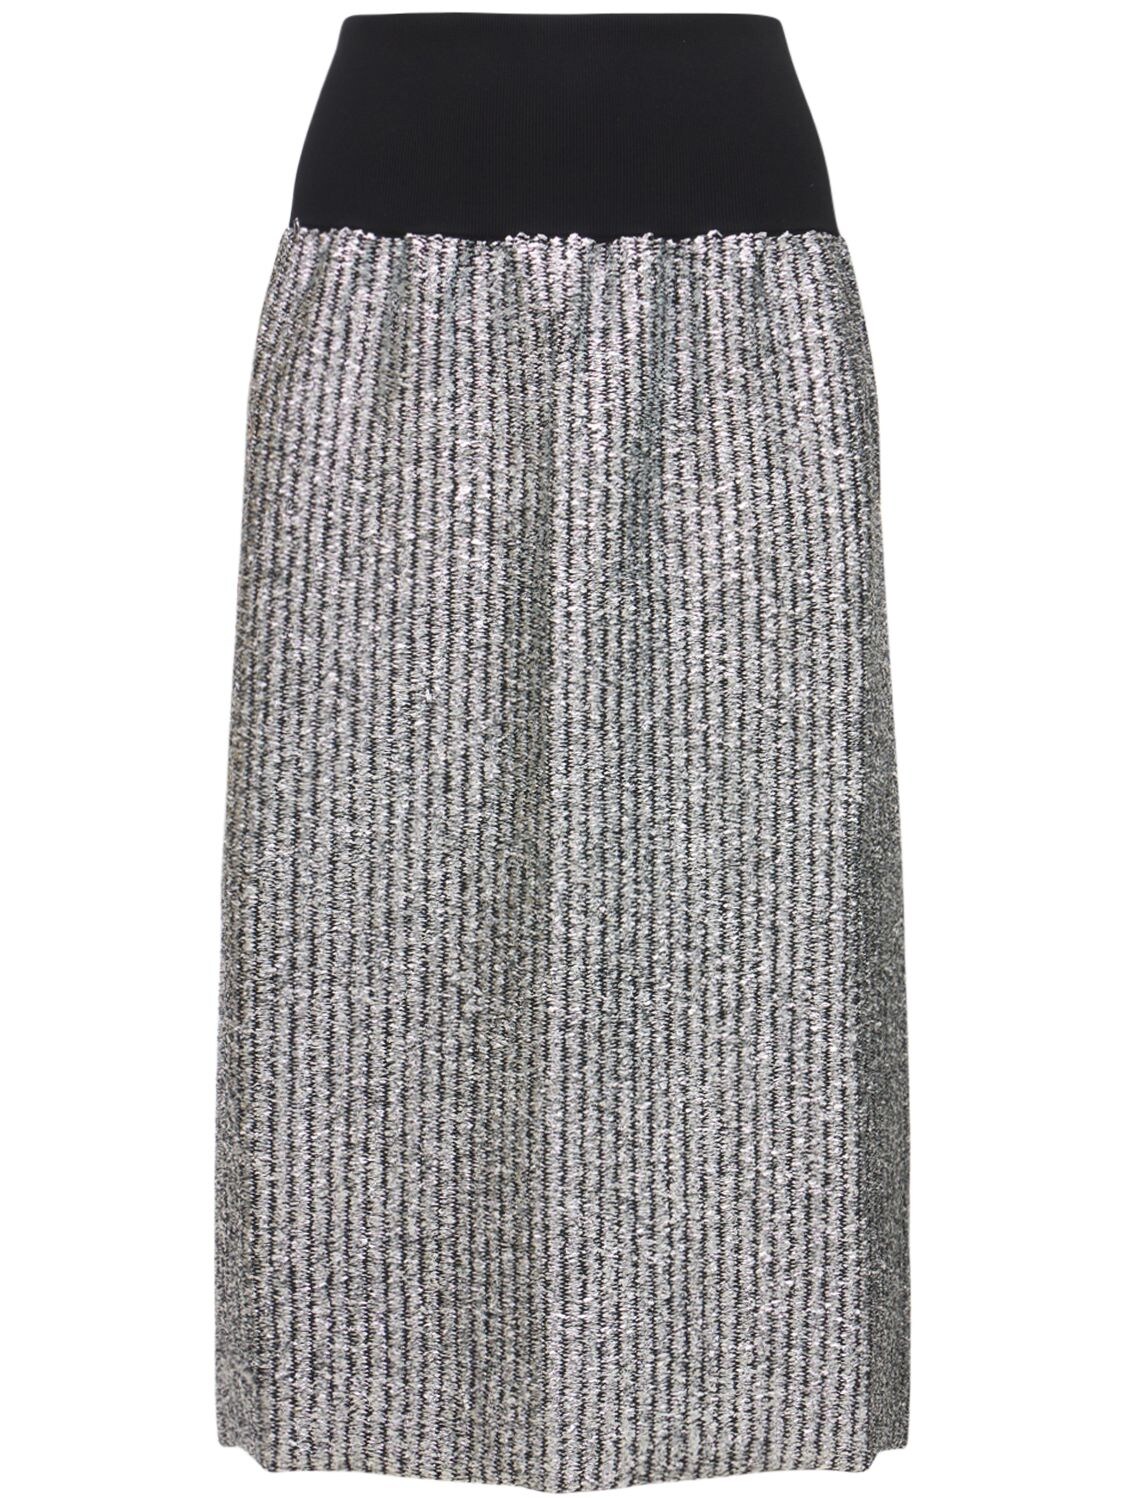 Moncler 1952 Metallic Wool Blend Skirt